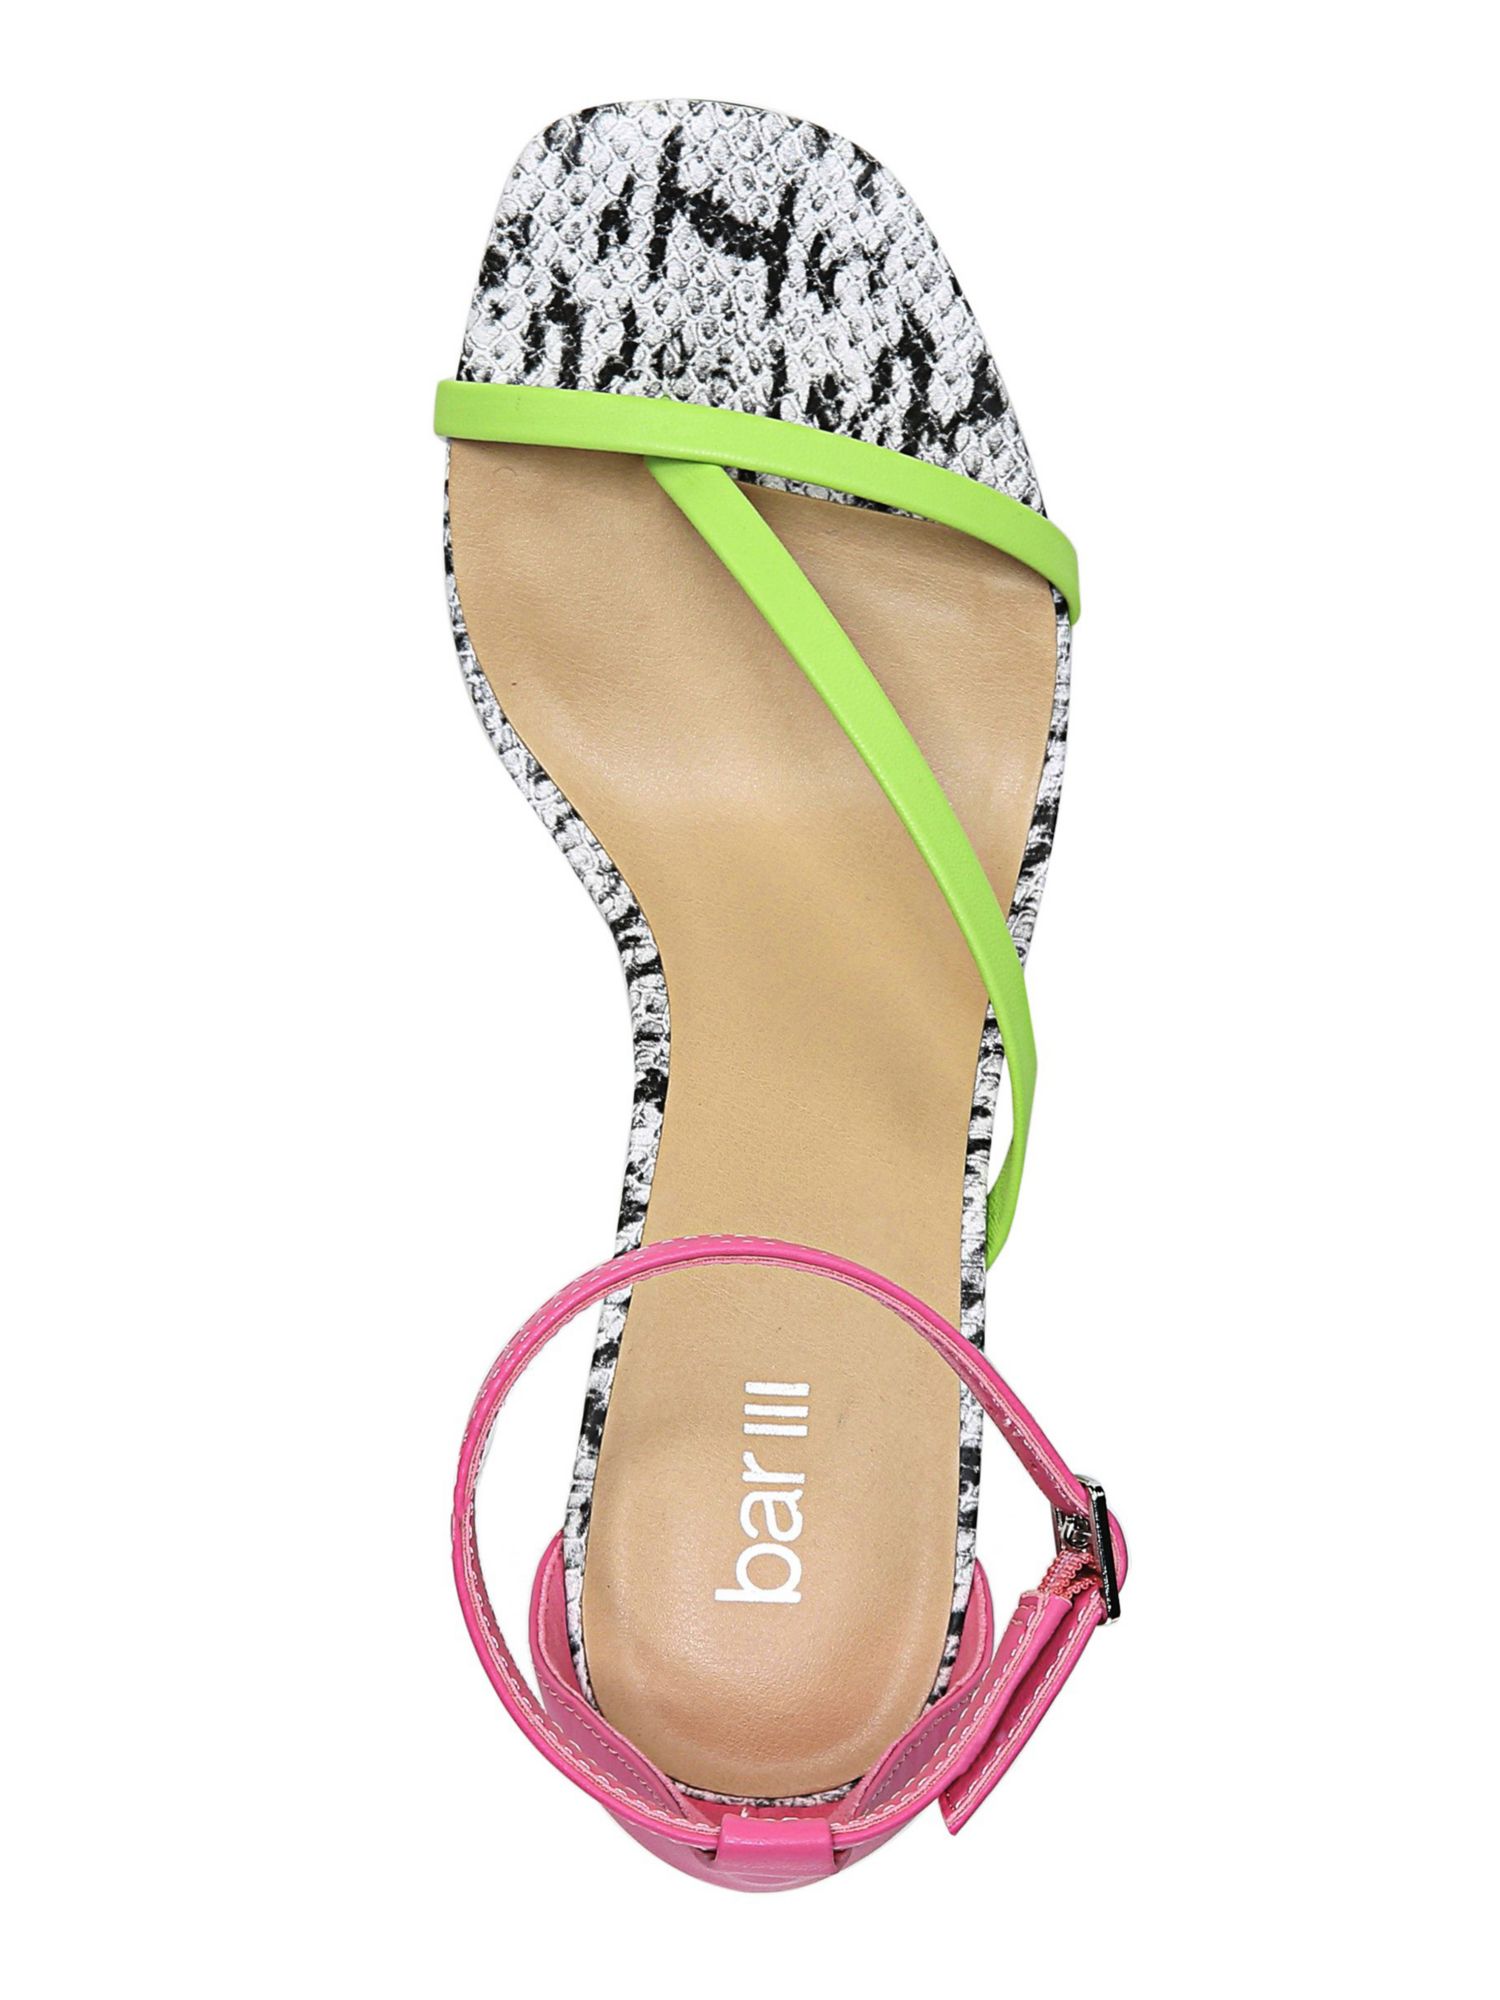 BAR III Womens Pink Transparent Heel Blakke Block Heel Thong Sandals Shoes 8.5 M